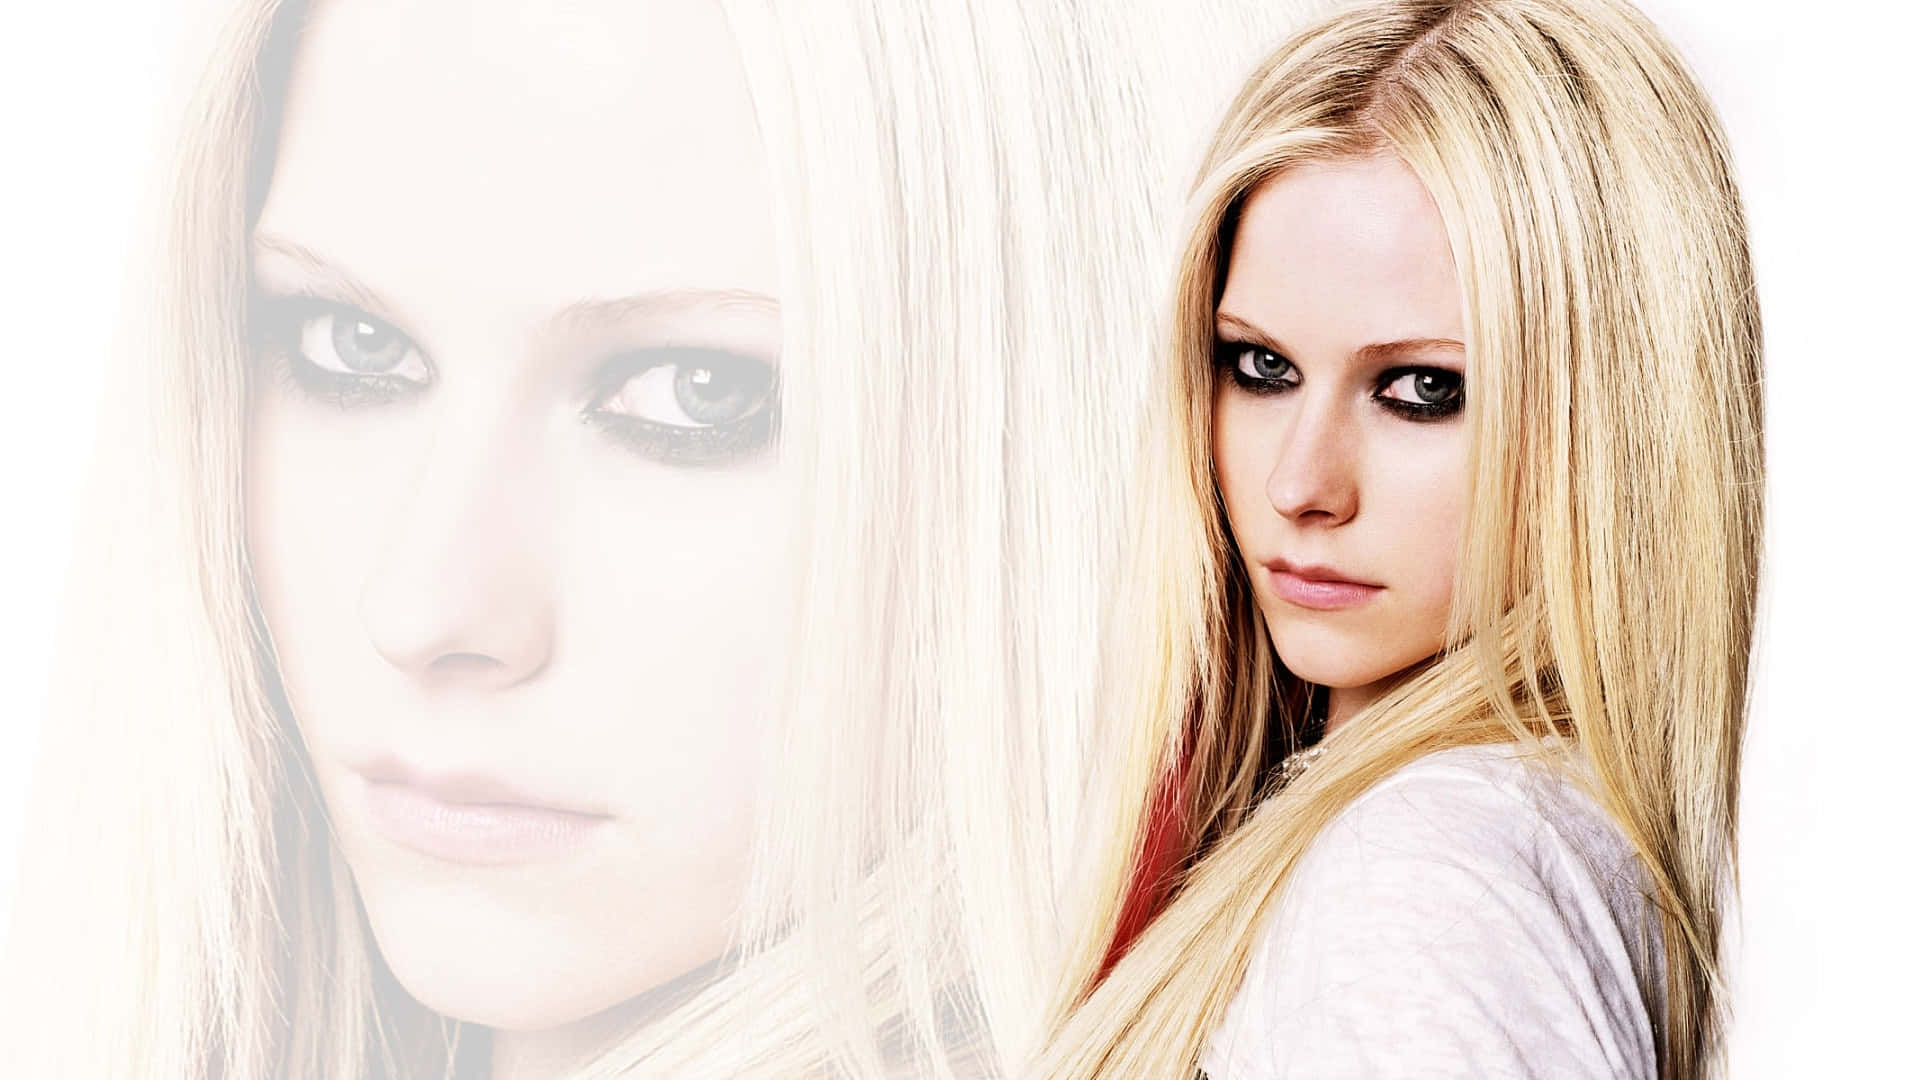 Rock Star Avril Lavigne Strikes a Pose